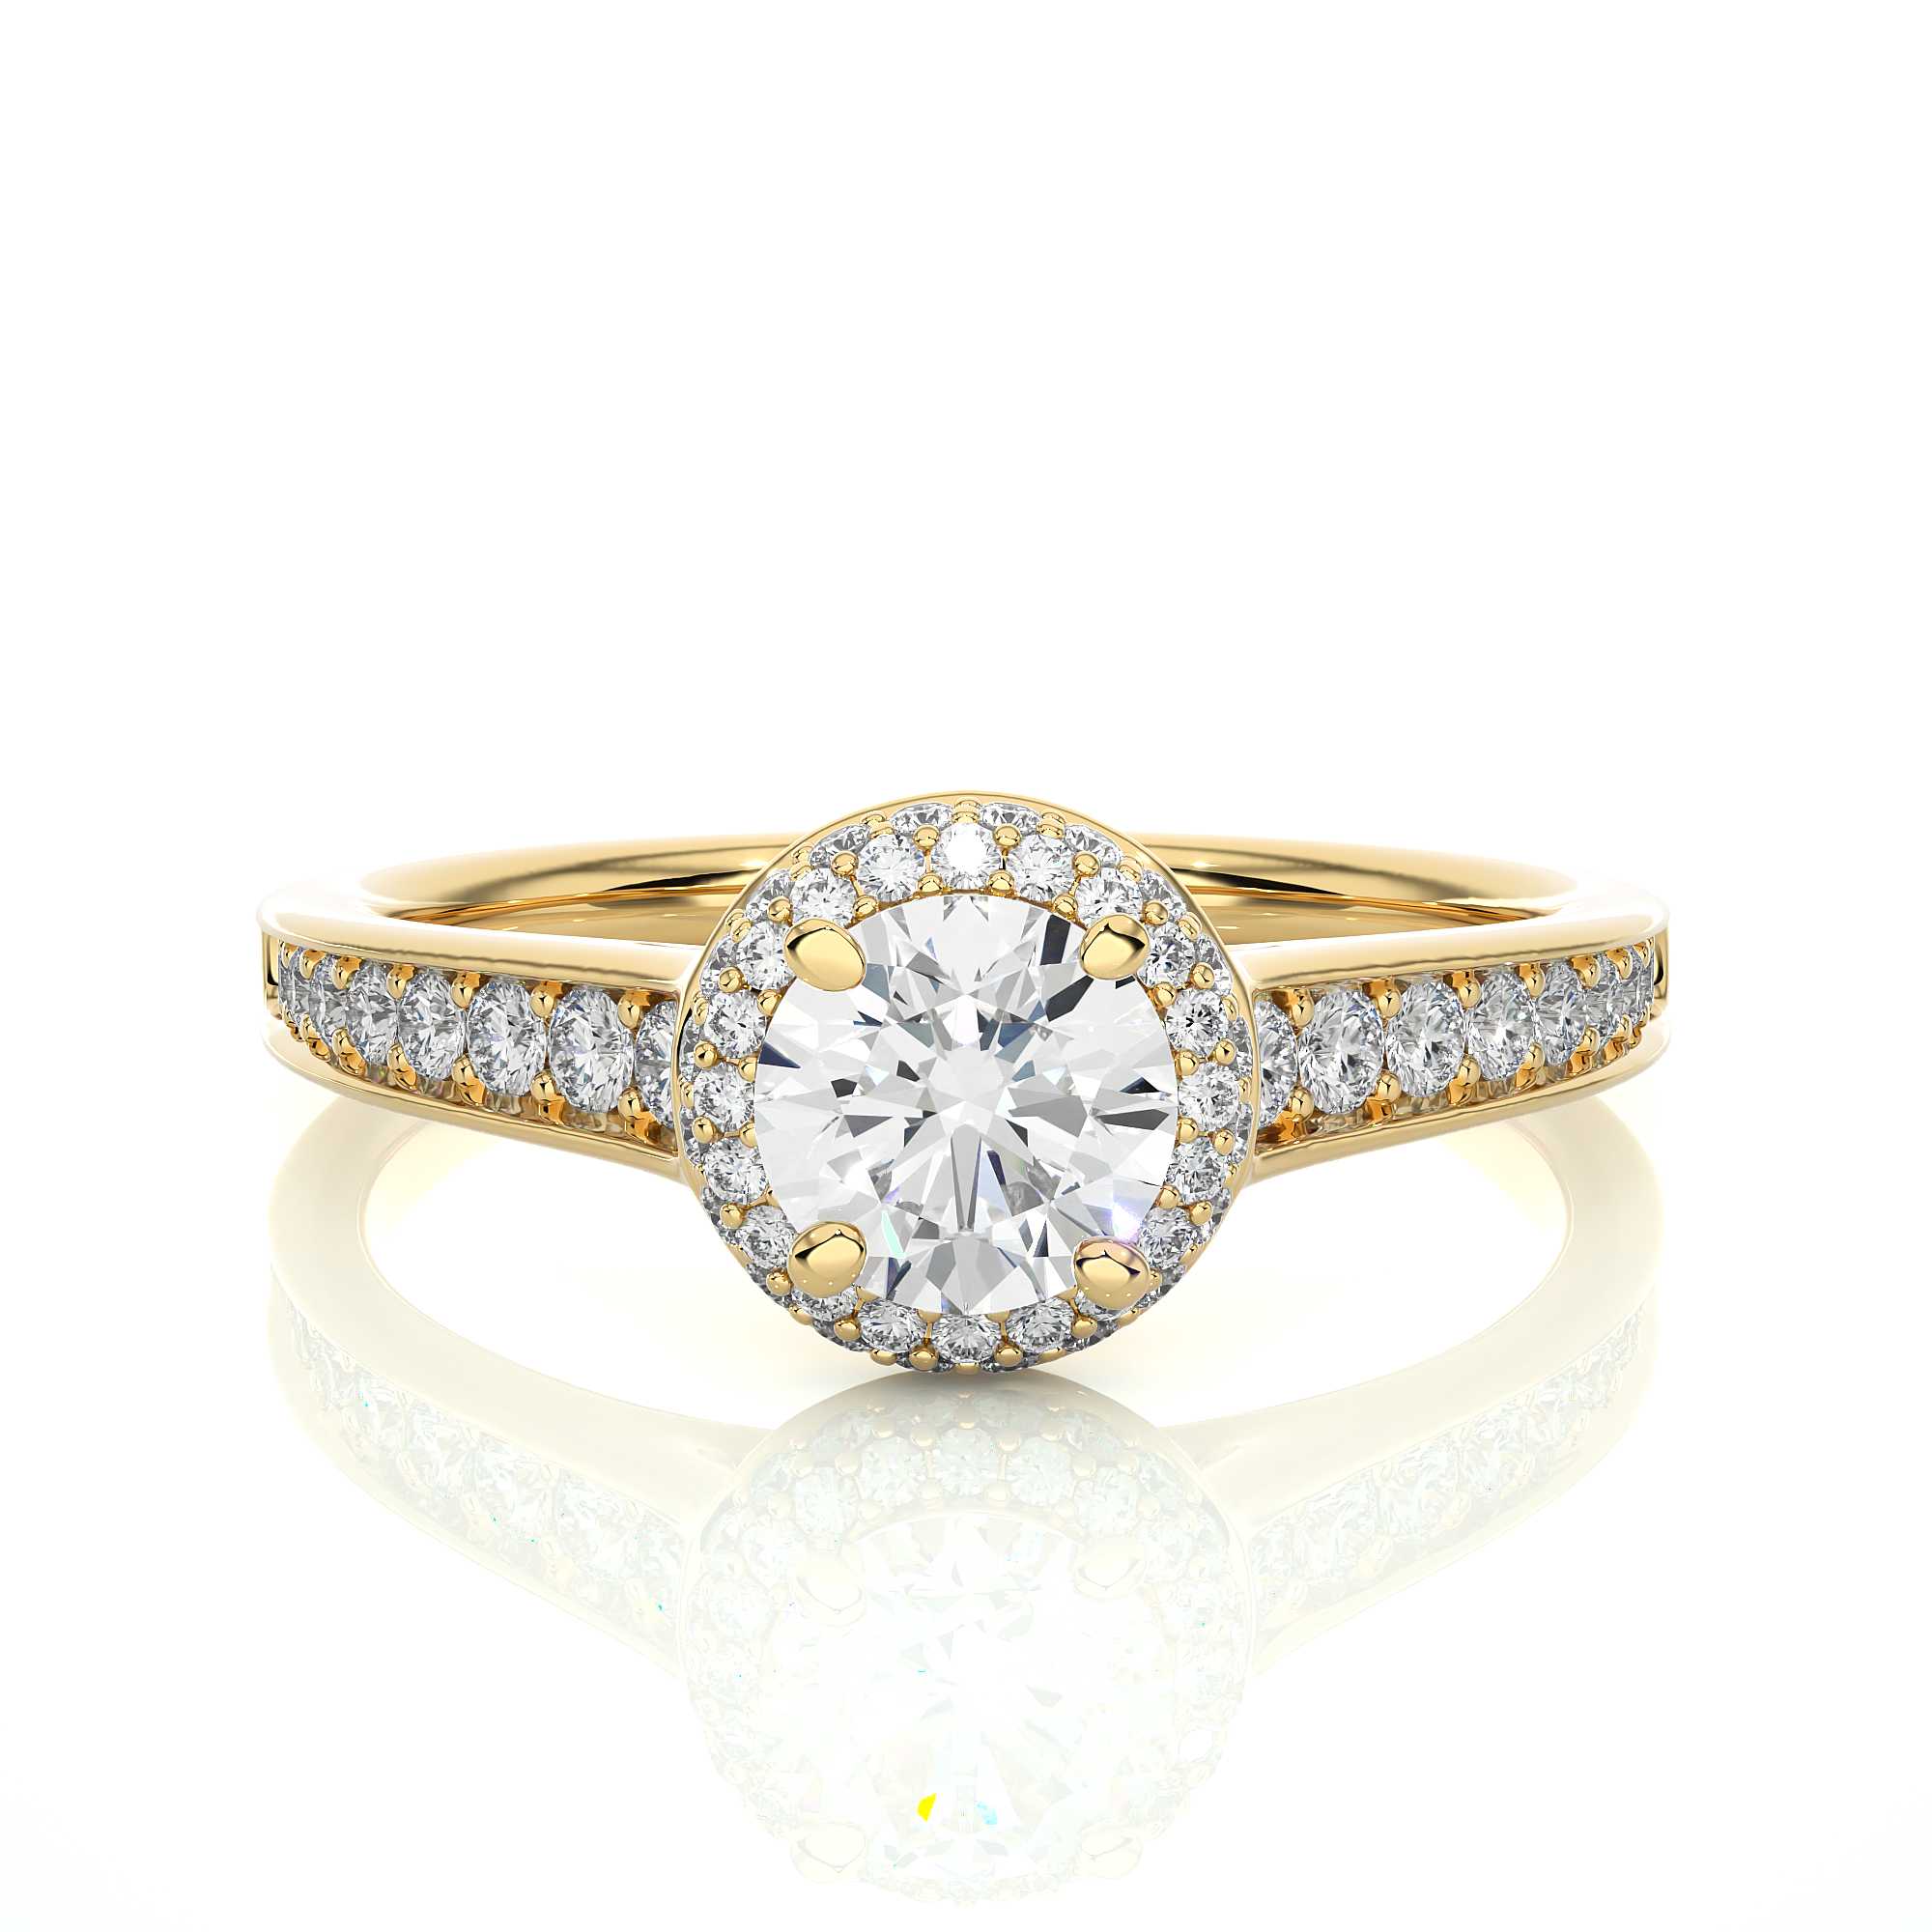 Yen Ring - Solitaire Diamond Ring